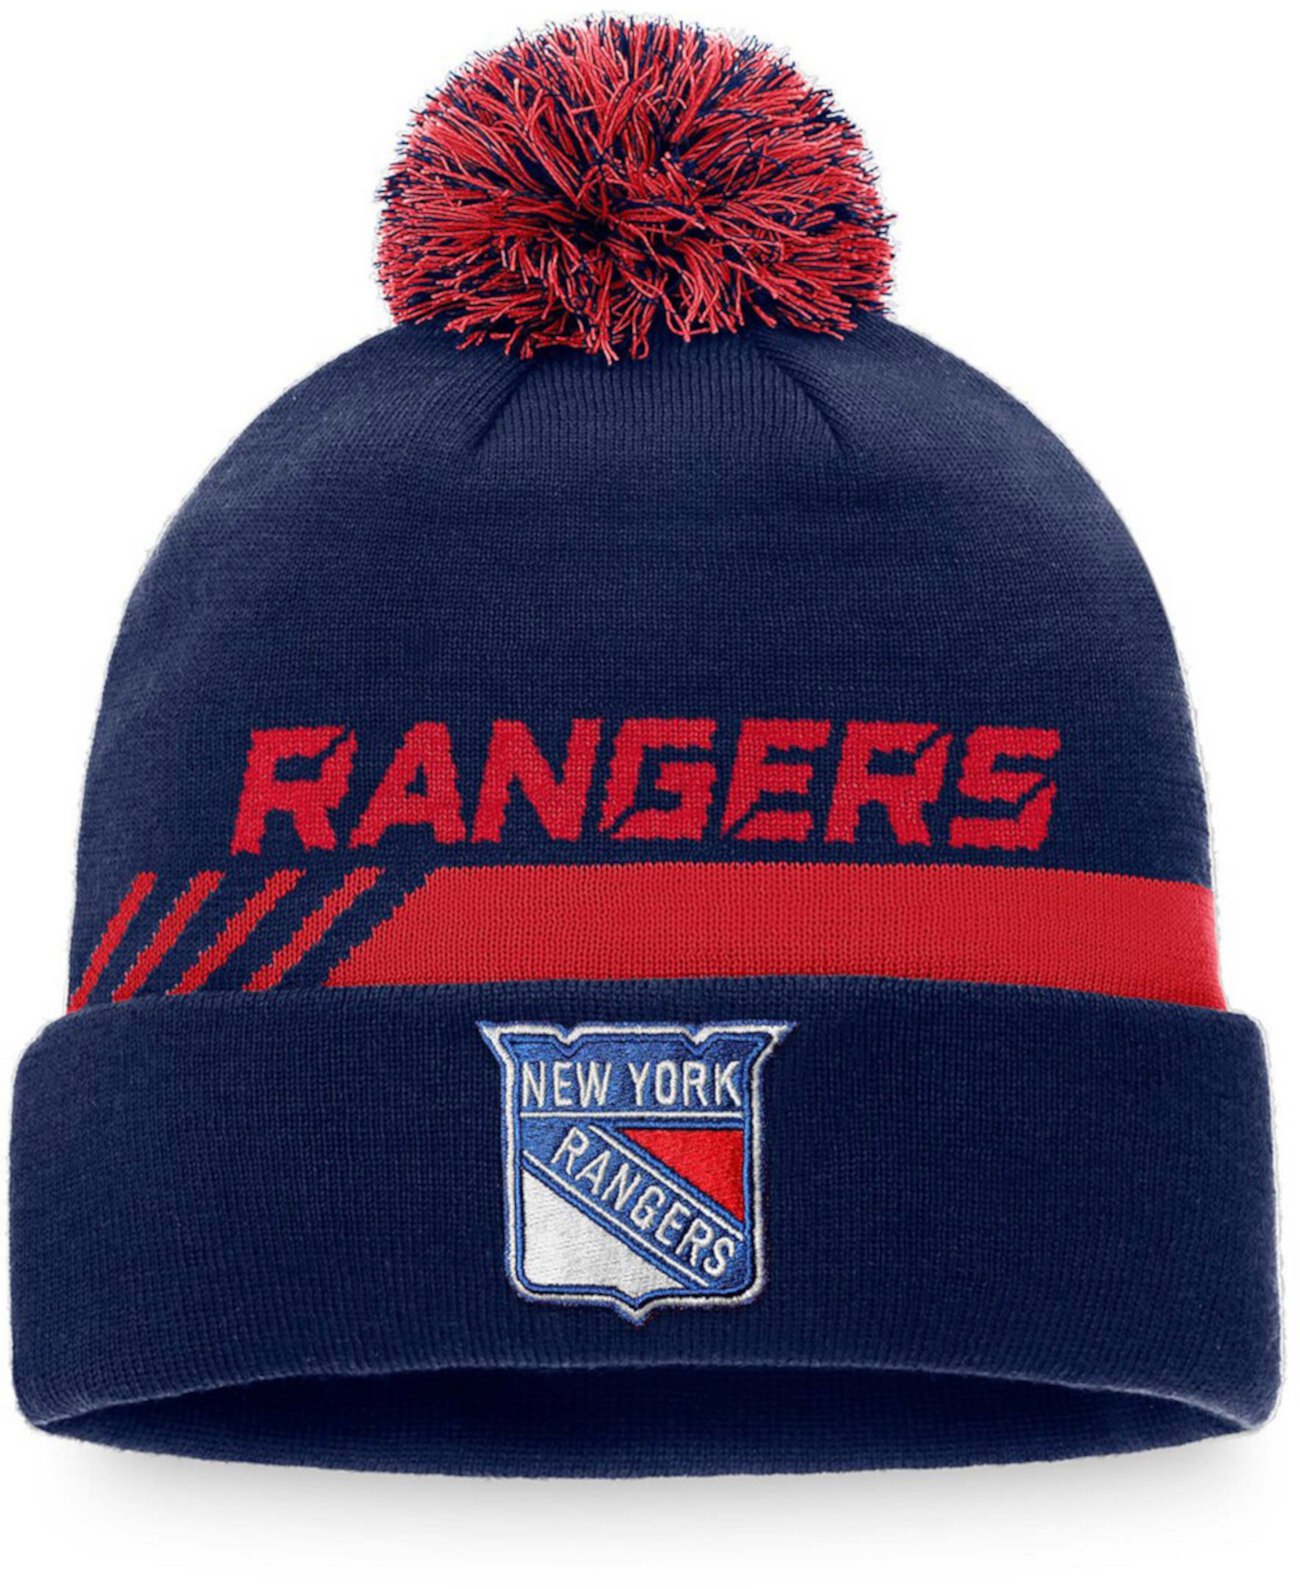 Мужская вязаная шапка New York Rangers Authentic Pro Team с манжетами и манжетами для раздевалок Fanatics Lids